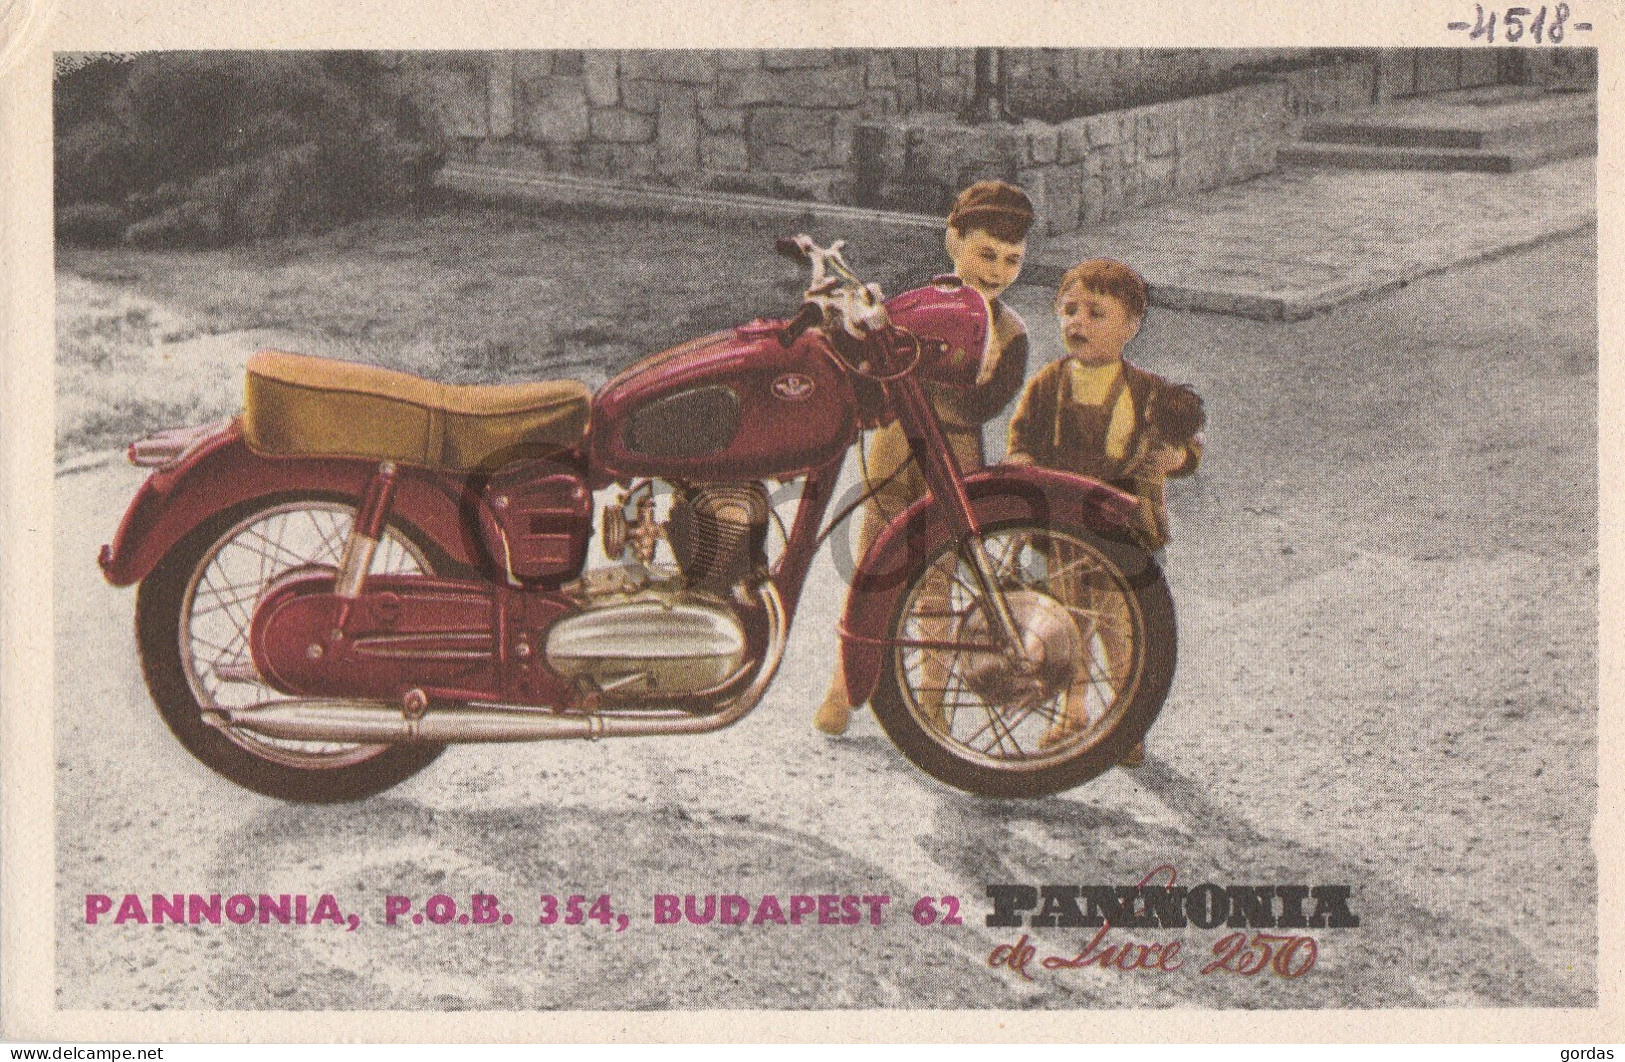 Hungary - Debrecen - Radio YO 3 ZR - 1961 - Old Time Motorcycle - Panonia - Advertise - Radio